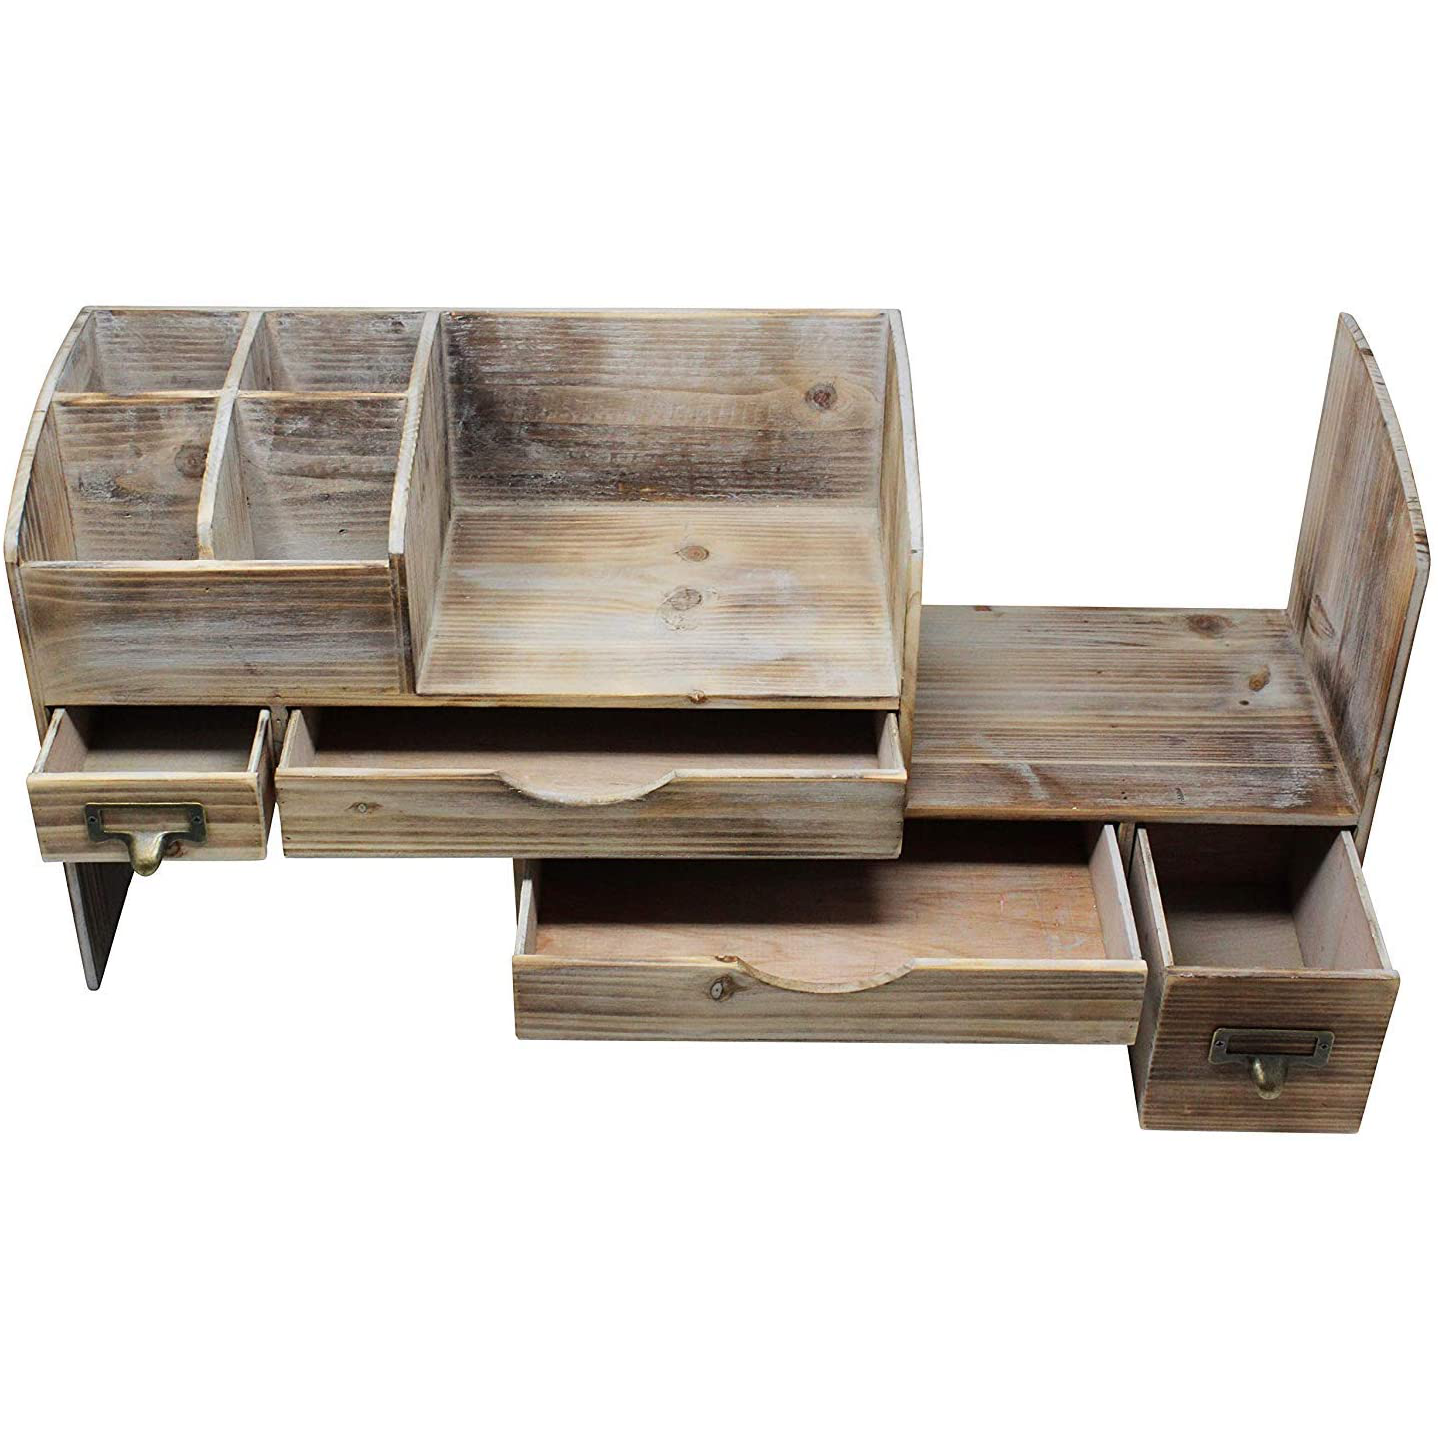 Adjustable Wooden Office Desk Organizer For Desktop, Tabletop, or Counter – Wood Storage Shelf Rack – For Office Supplies, Desk Accessories, or Mail - Barnwood